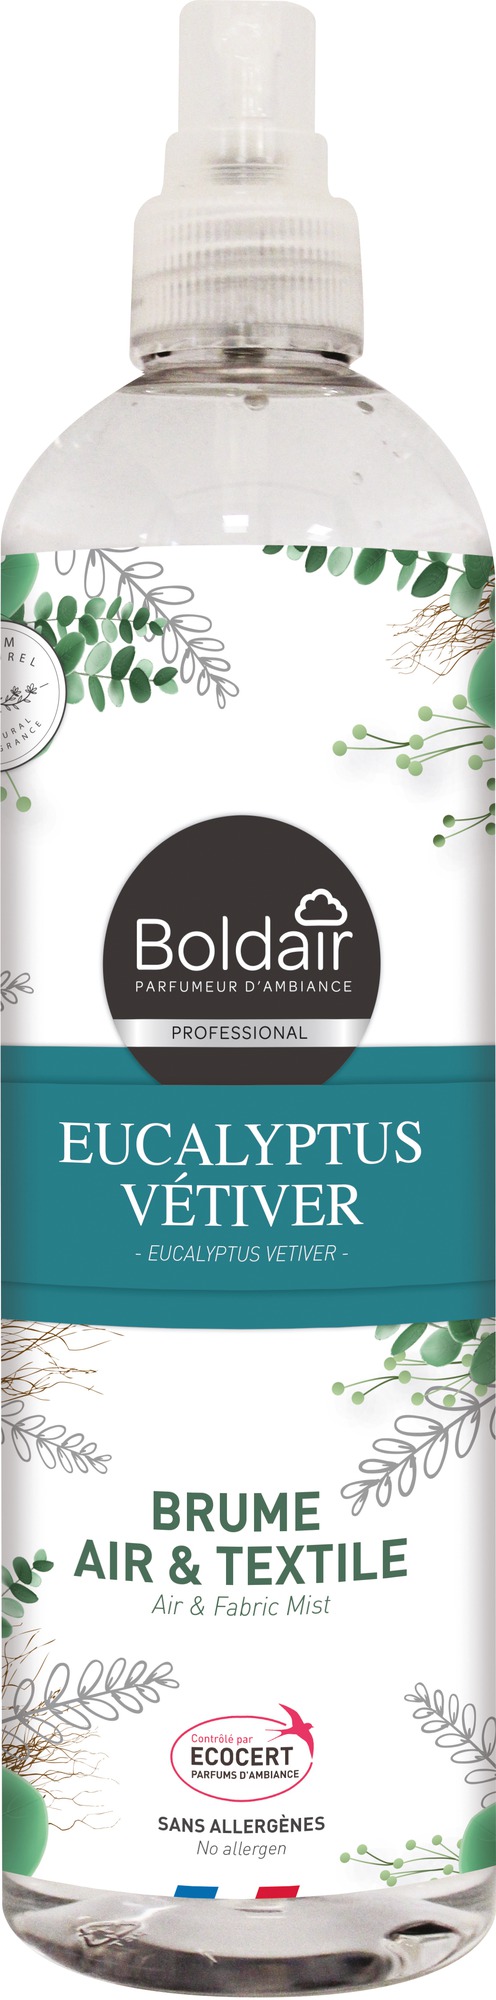 Brume air et textile - Boldair - 400 ml - Eucalyptus vétiver